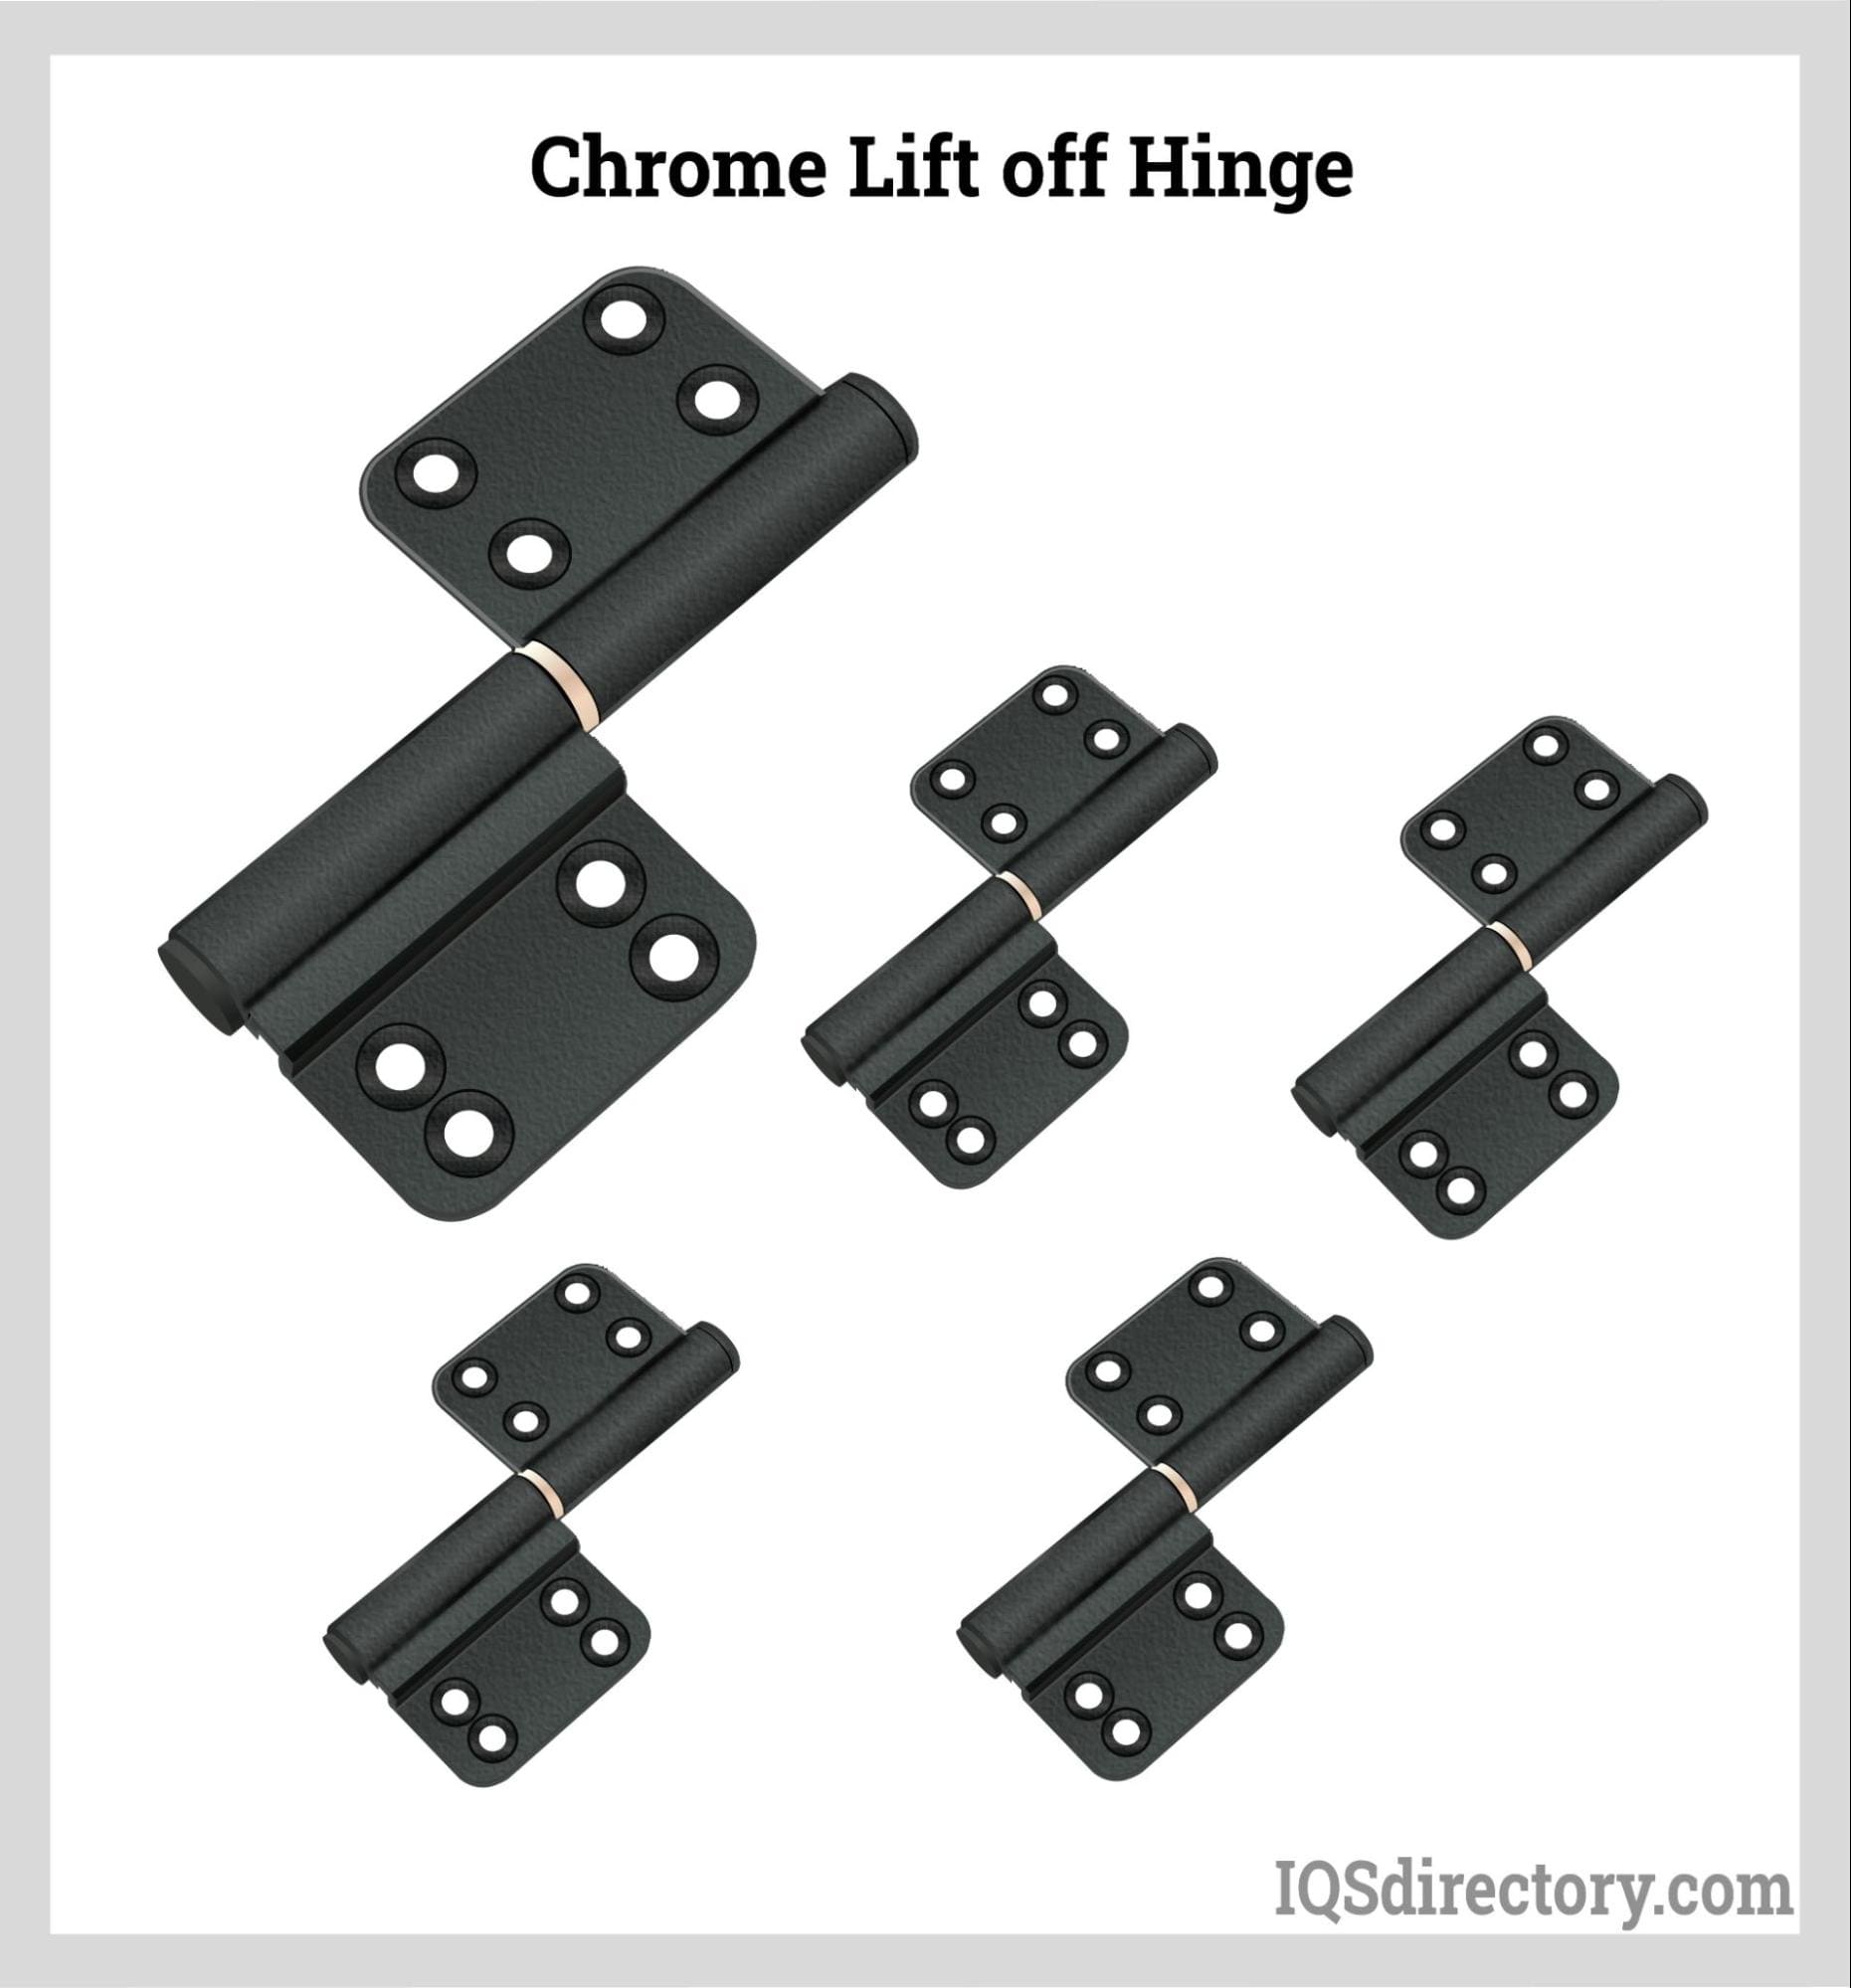 Chrome Lift off Hinge